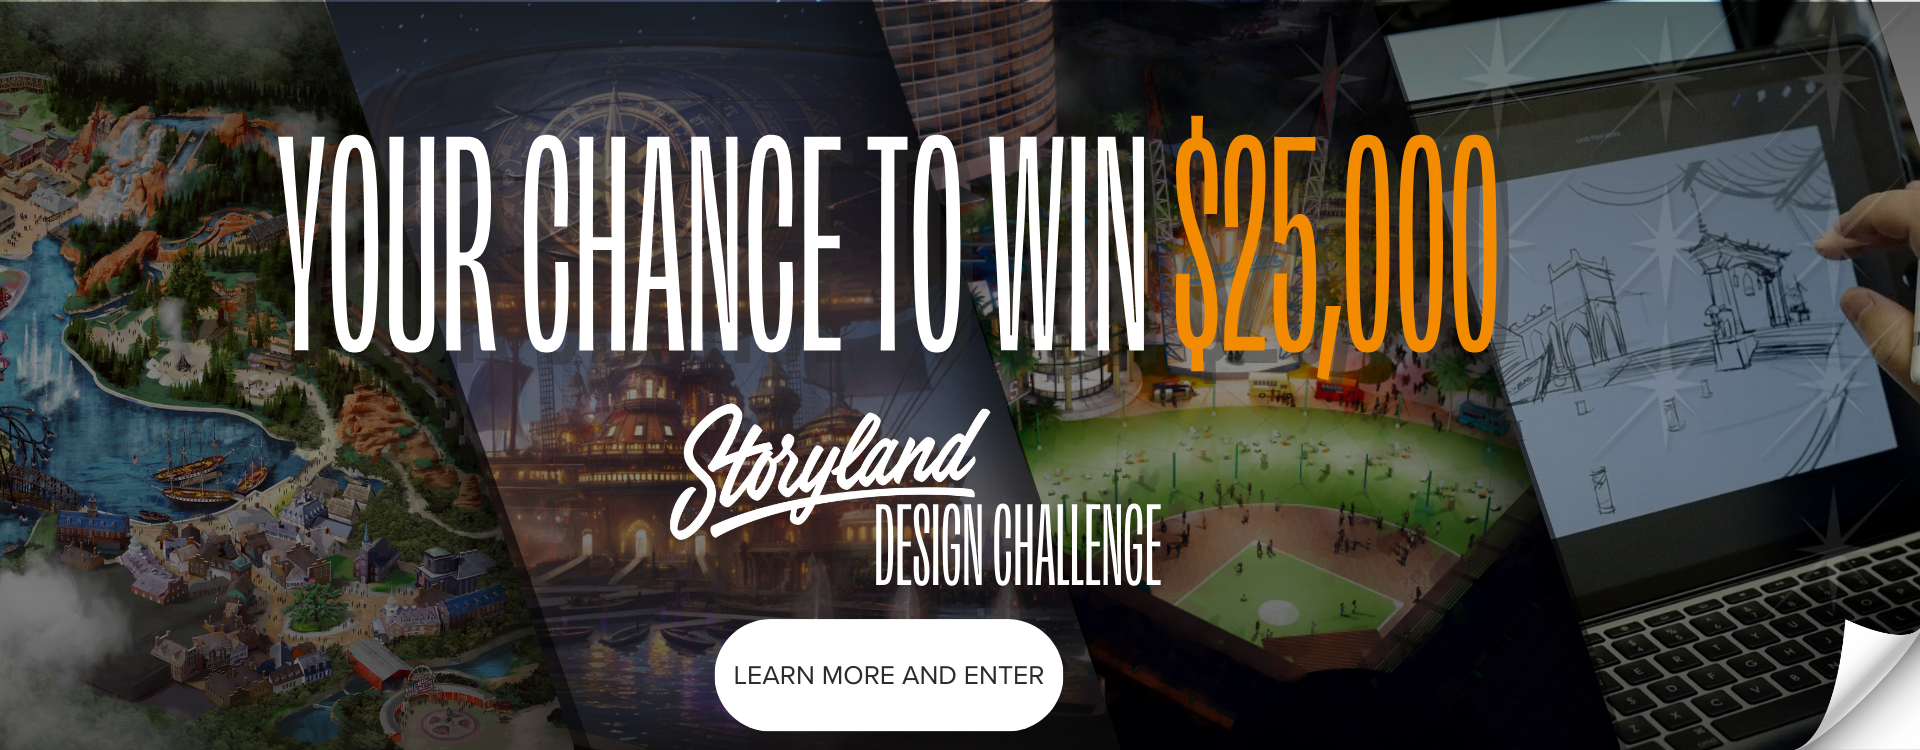 Storyland Studios Design Challenge. Learn More.